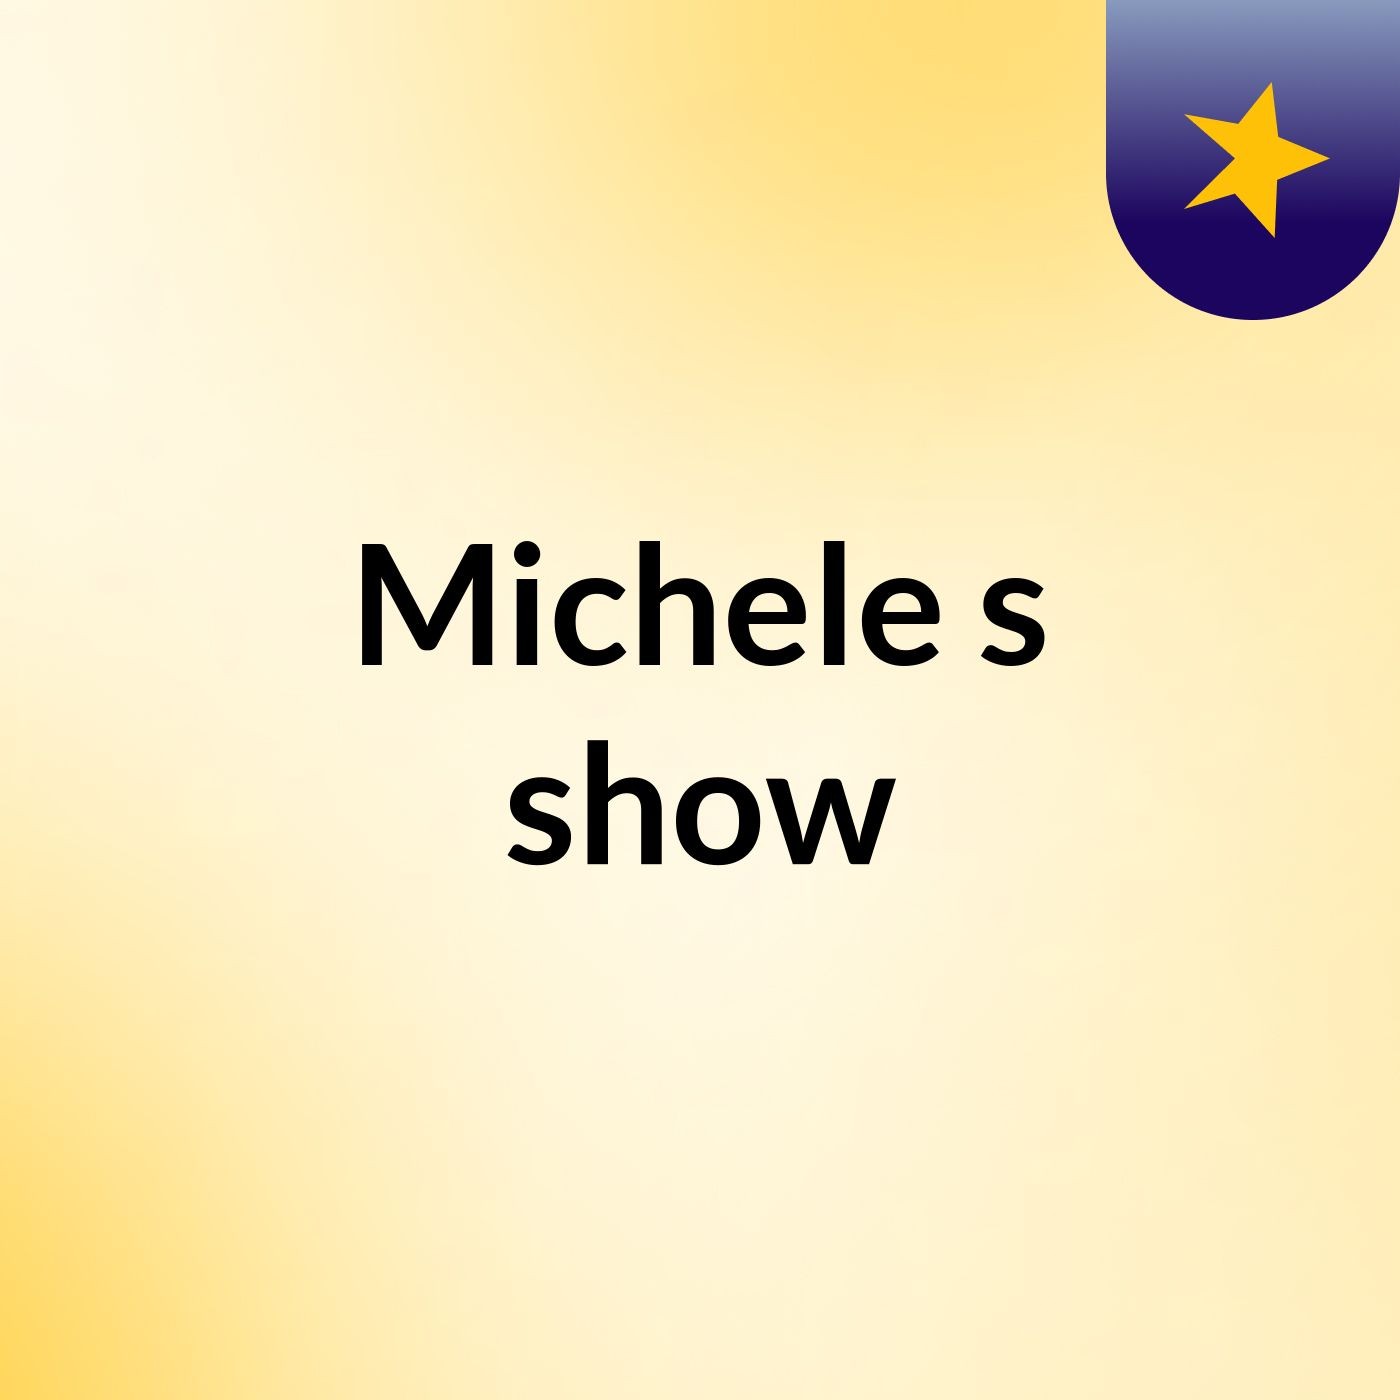 Michele's show